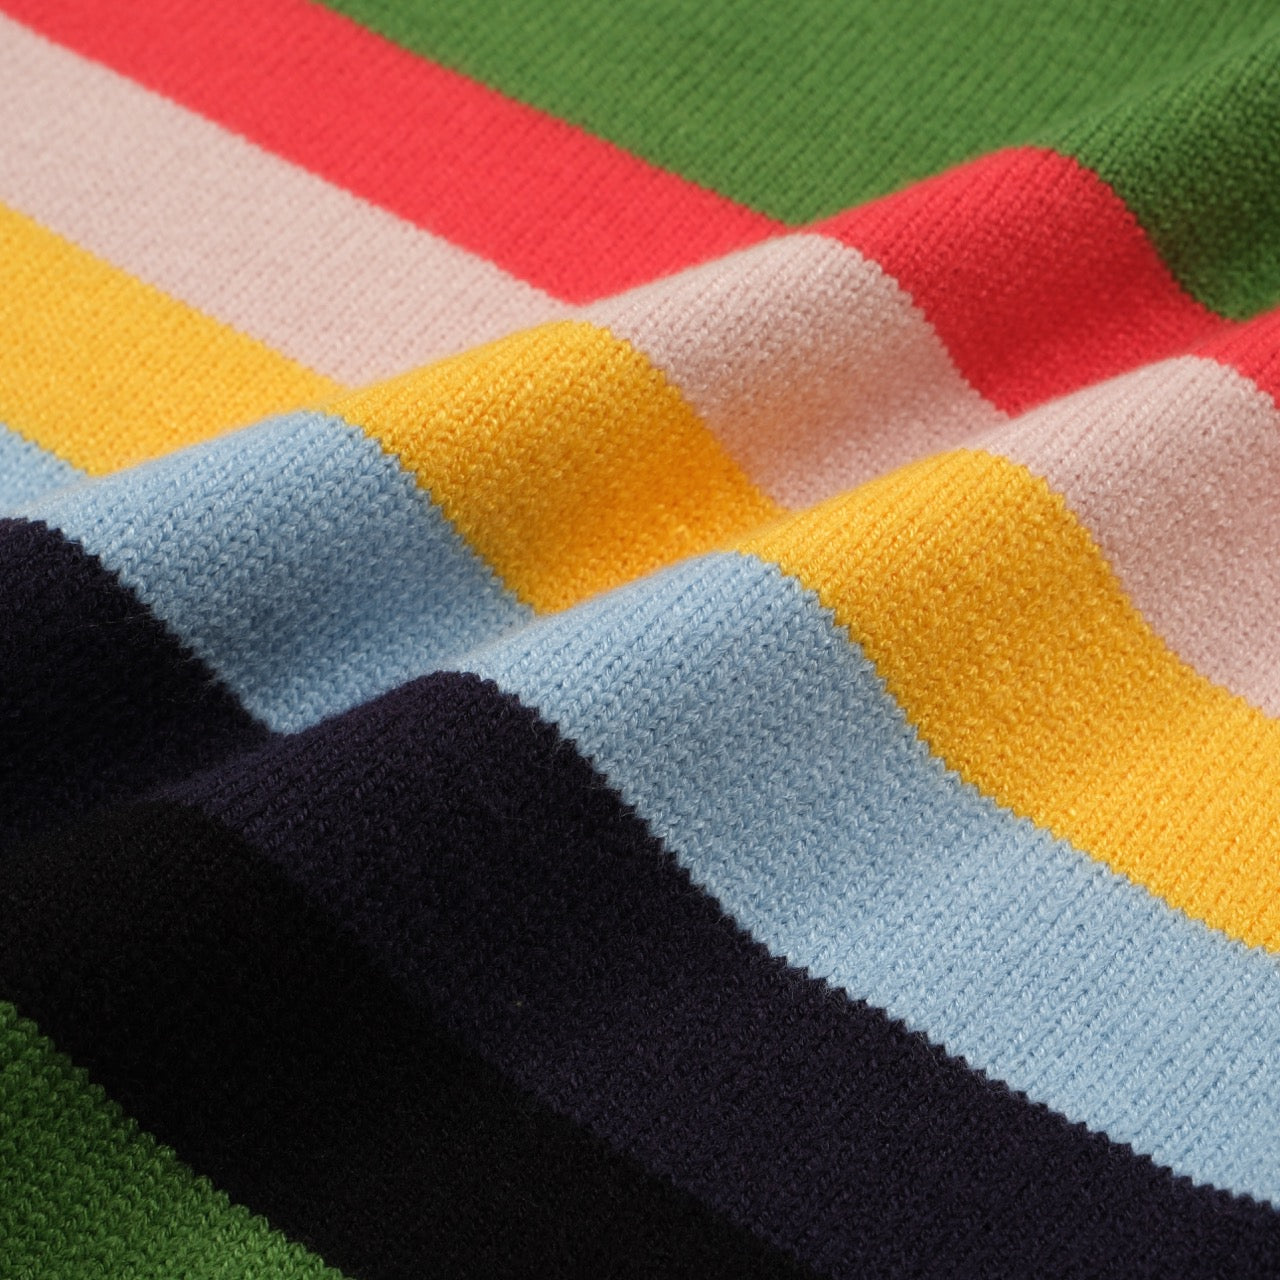 Men's Rainbow Striped Chest Print Green Sweater